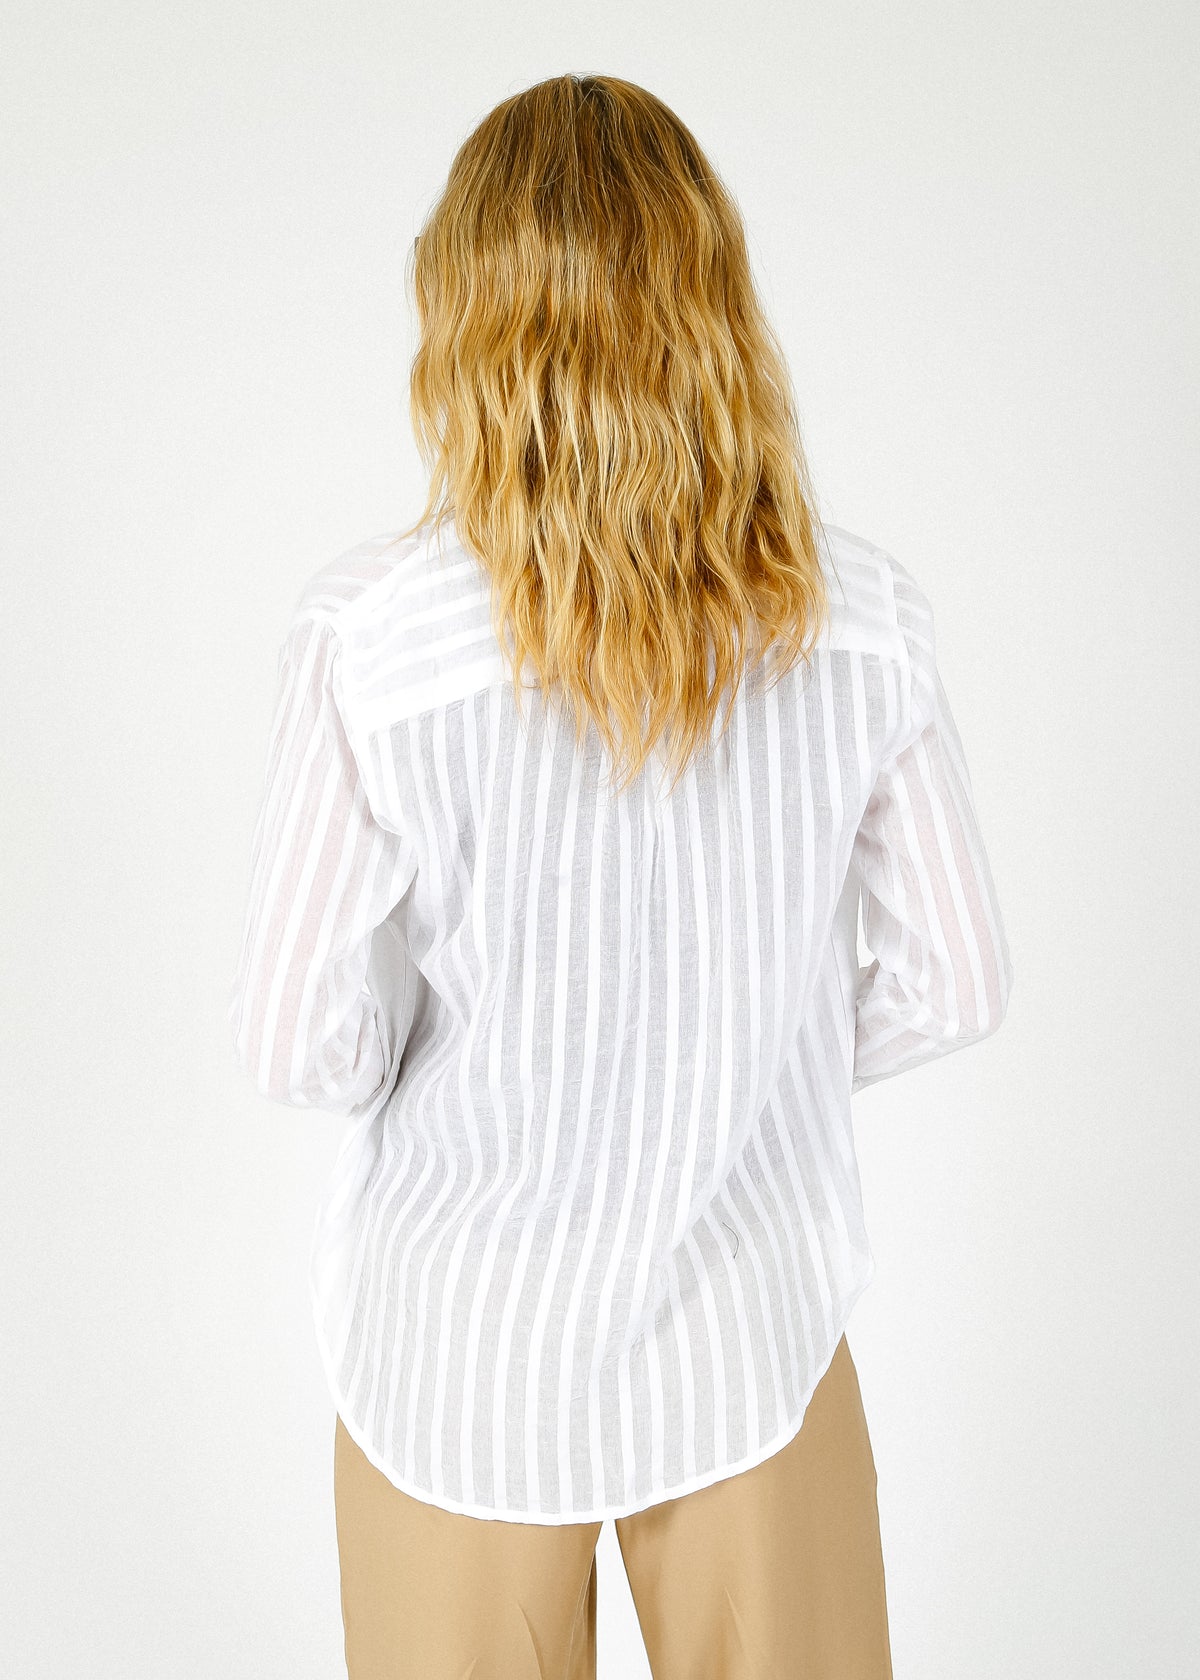 RAILS Charli Shirt in White Shadow Stripe